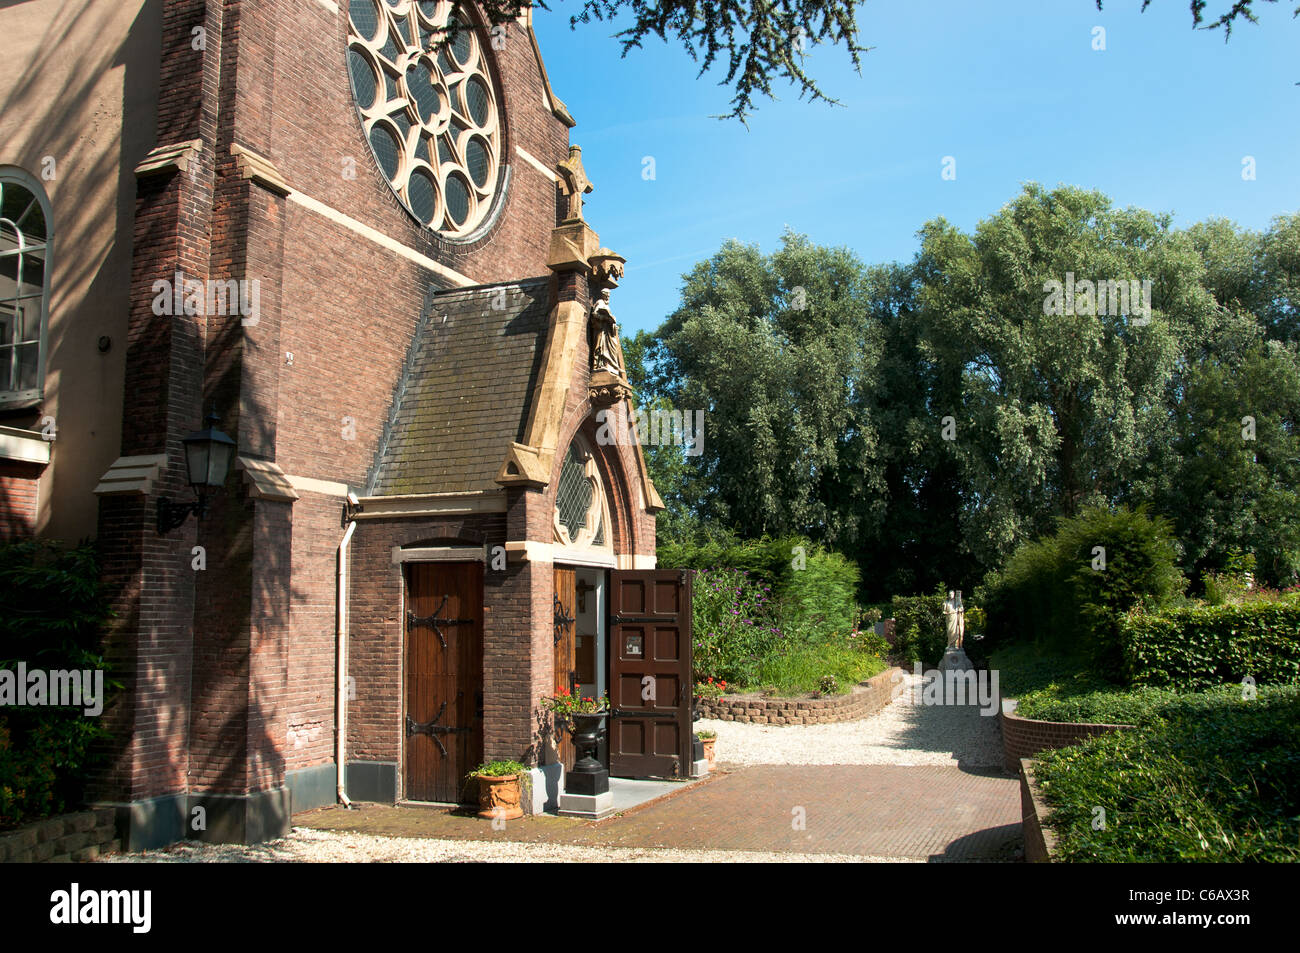 Cimetière catholique Begraafplaats Zijlpoort Leiden Pays-Bas Banque D'Images